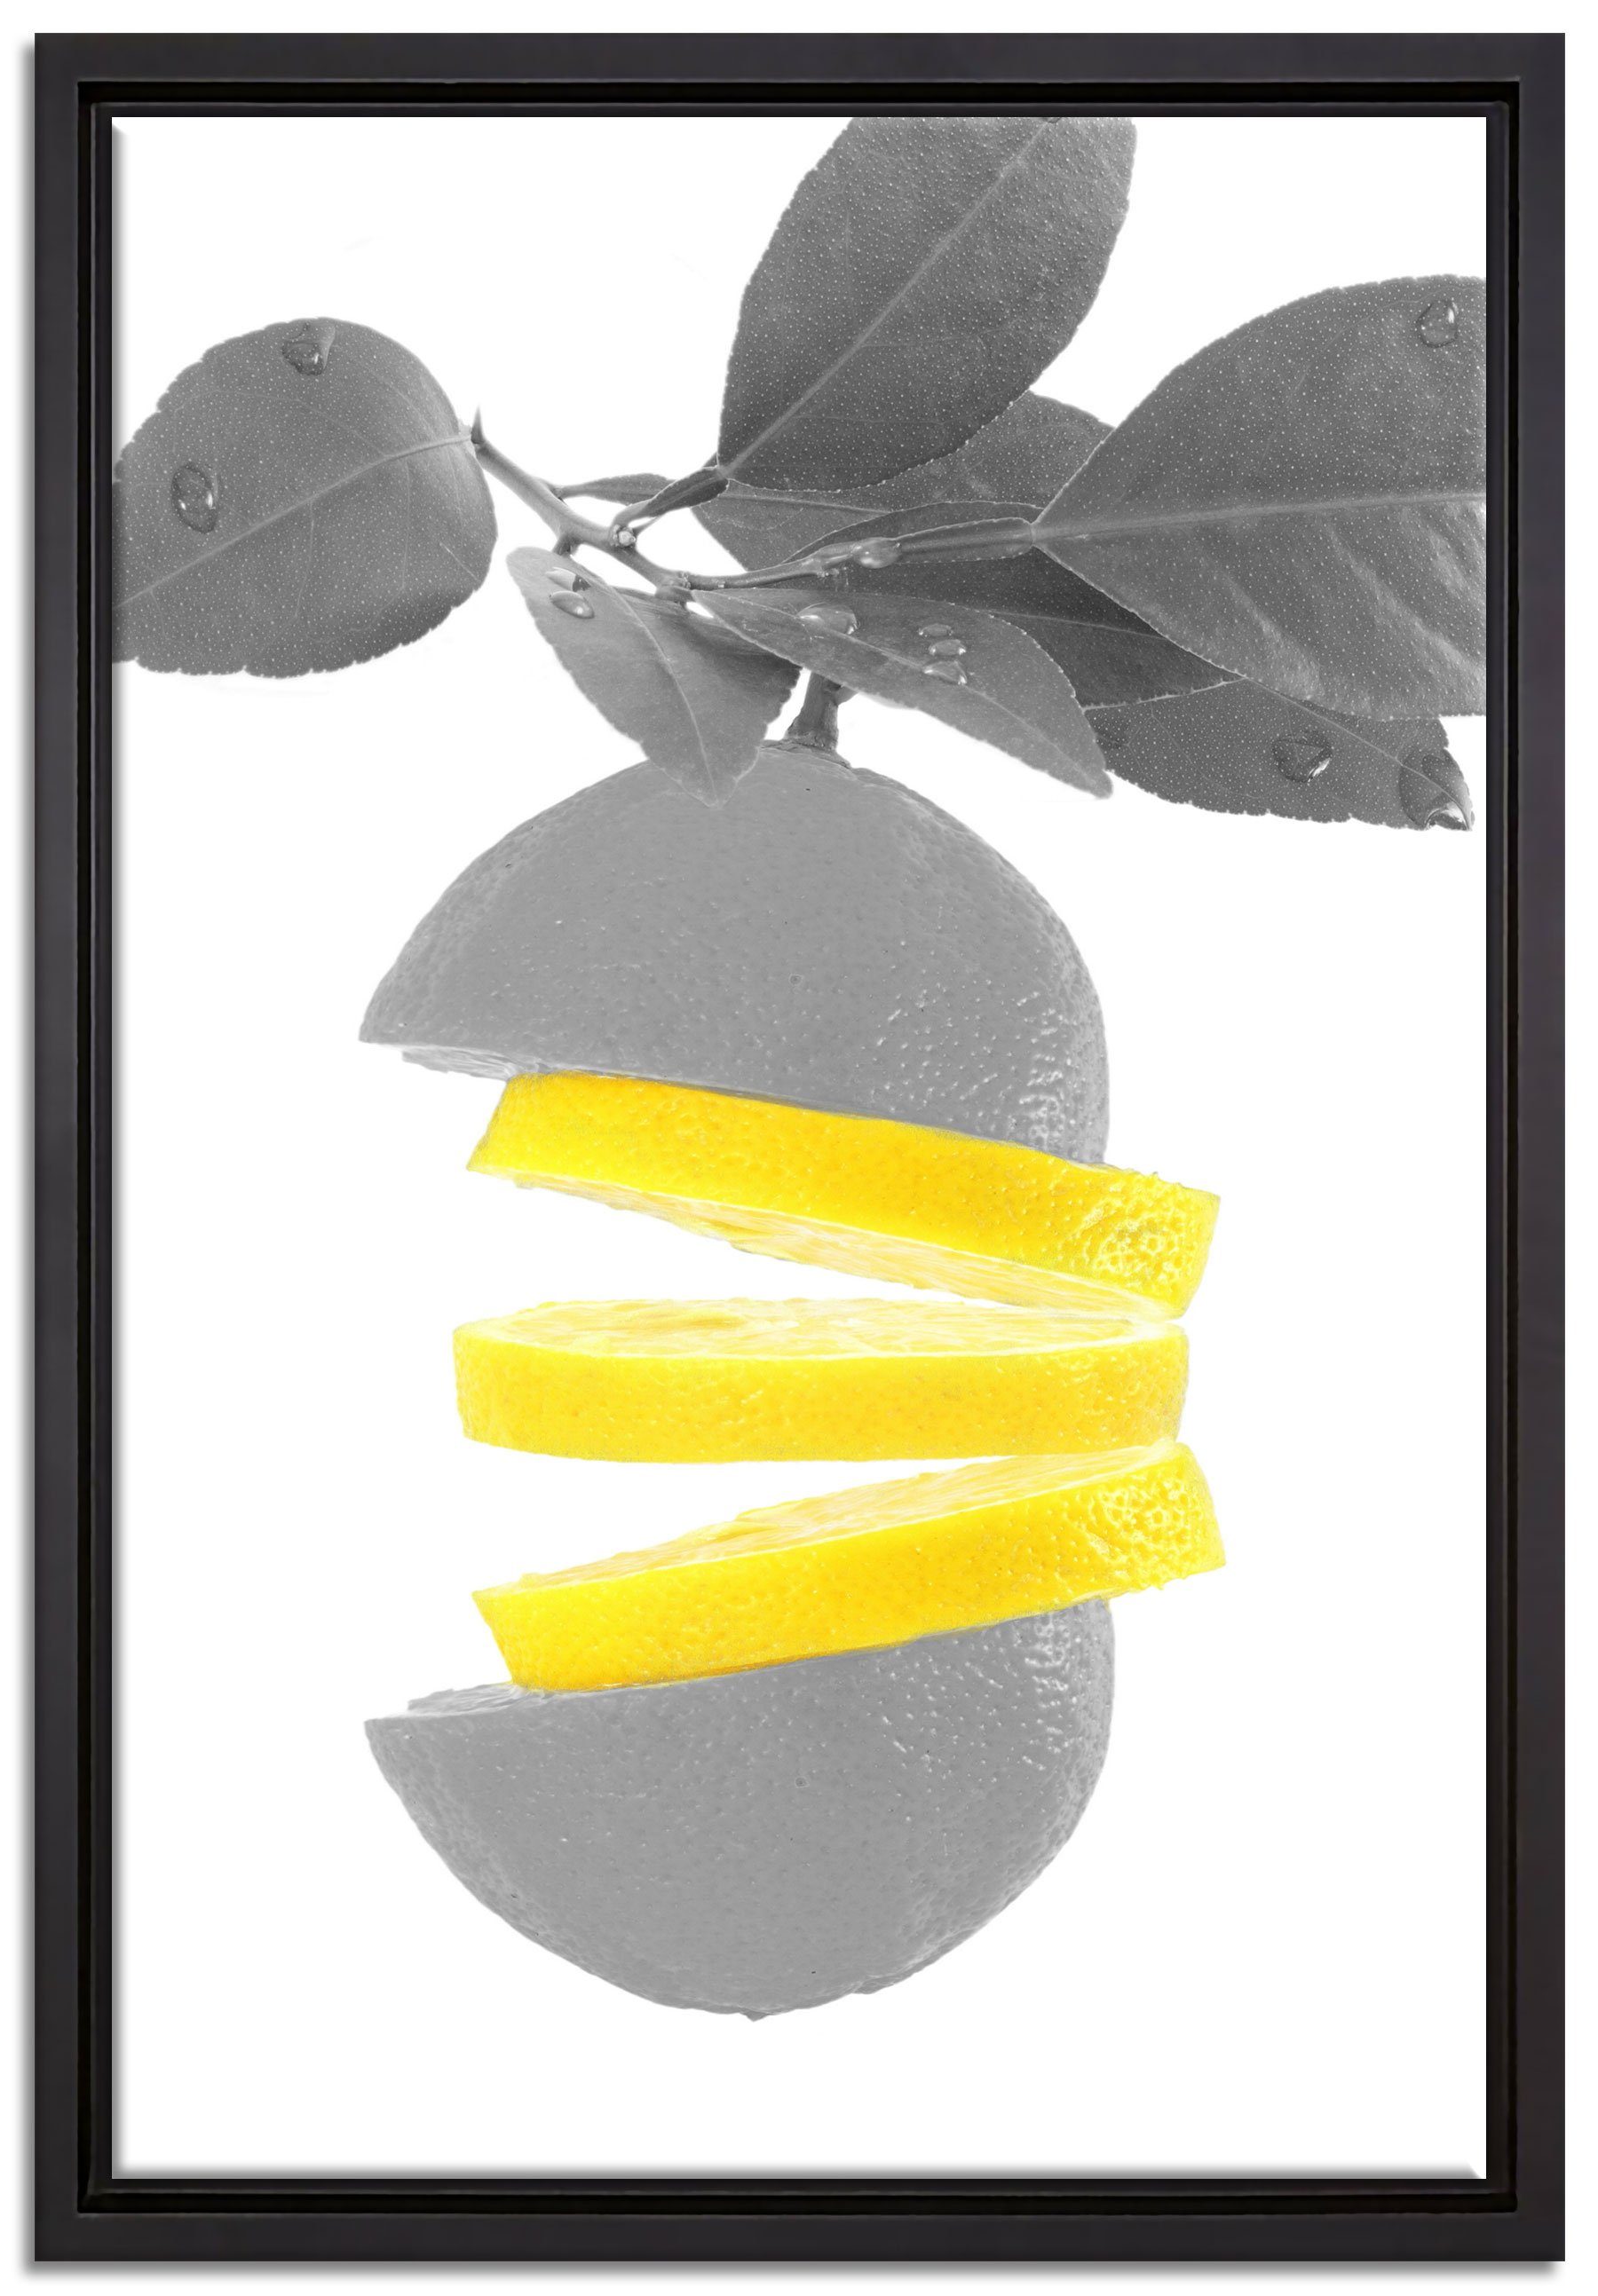 Pixxprint Leinwandbild Frische aufgeschnittene Zitrone, Wanddekoration (1 St), Leinwandbild fertig bespannt, in einem Schattenfugen-Bilderrahmen gefasst, inkl. Zackenaufhänger